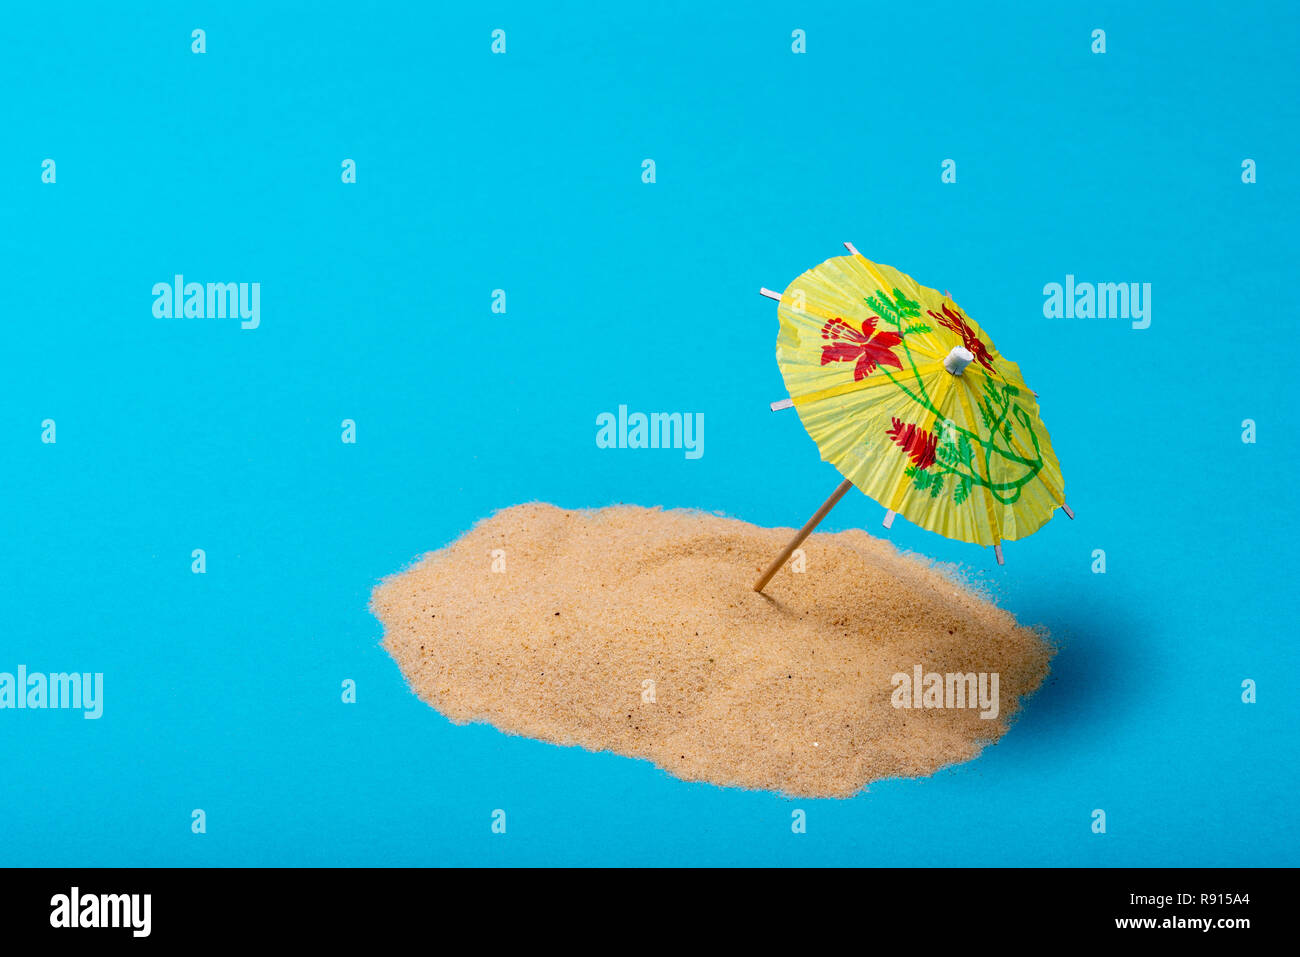 Concept of a remote tropical island paradise, with a beach parasol or umbrella. Stock Photo